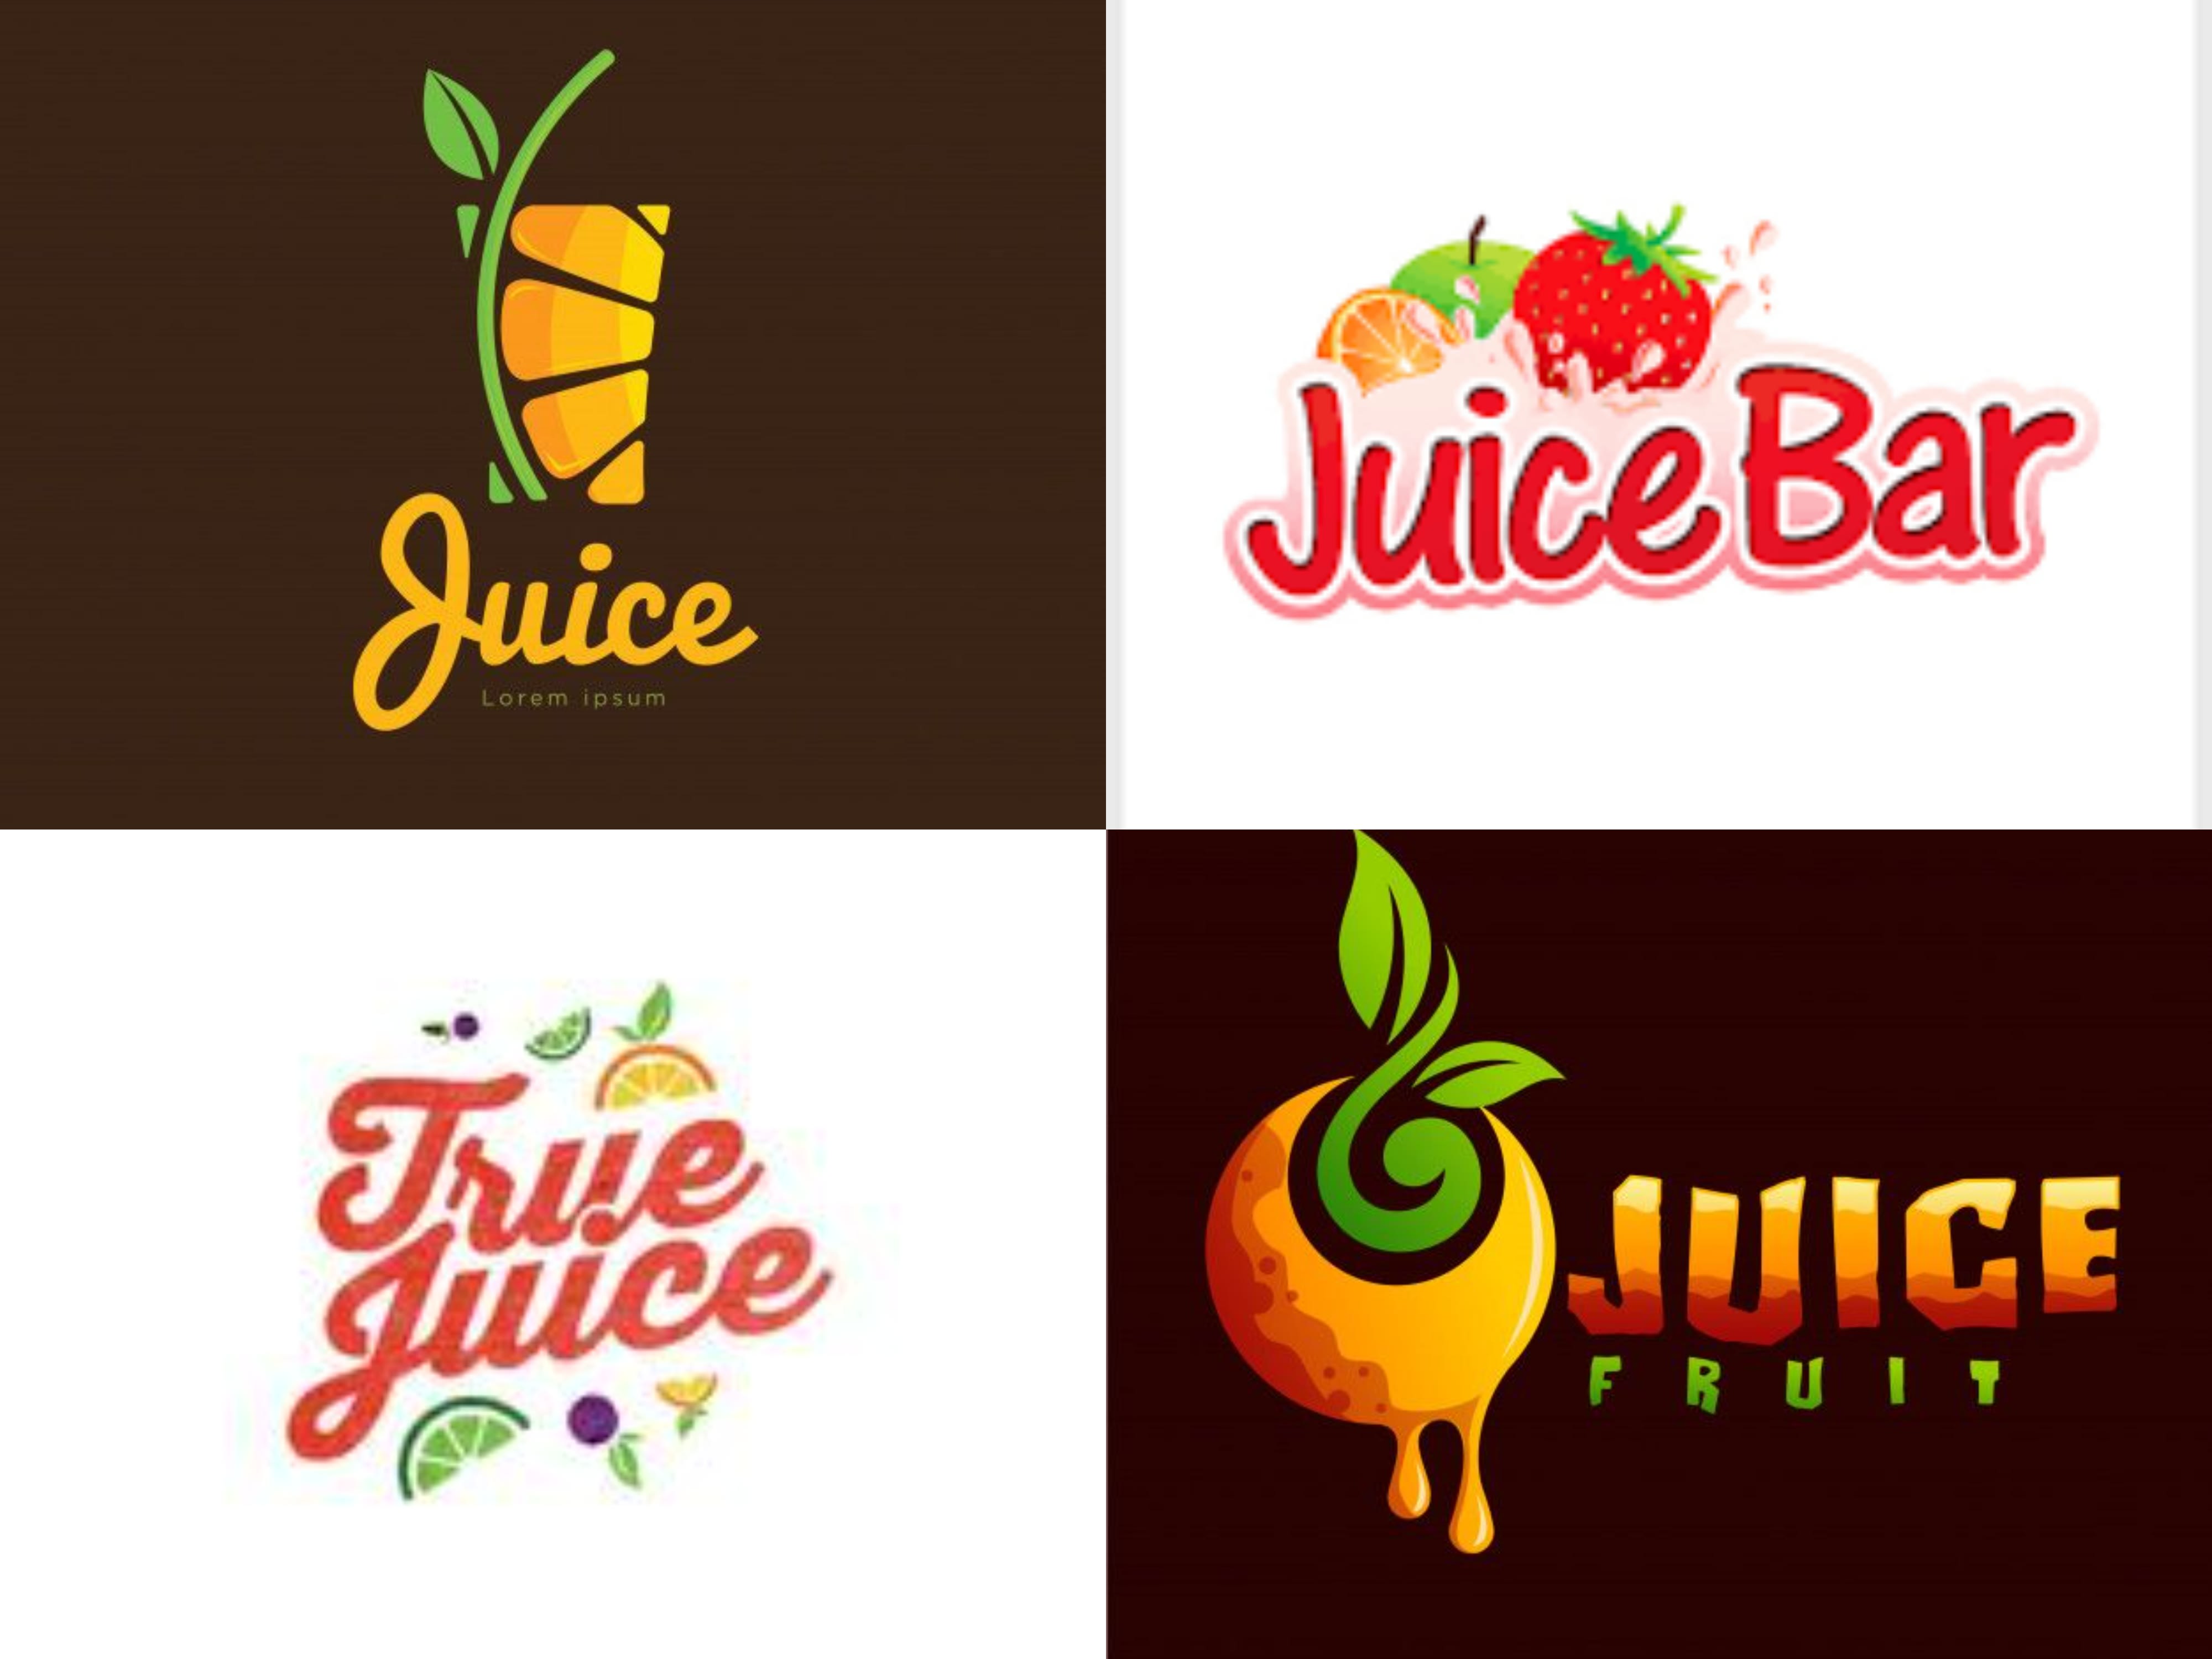 Juice Bar Logos - 62+ Best Juice Bar Logo Ideas. Free Juice Bar Logo Maker.  | 99designs